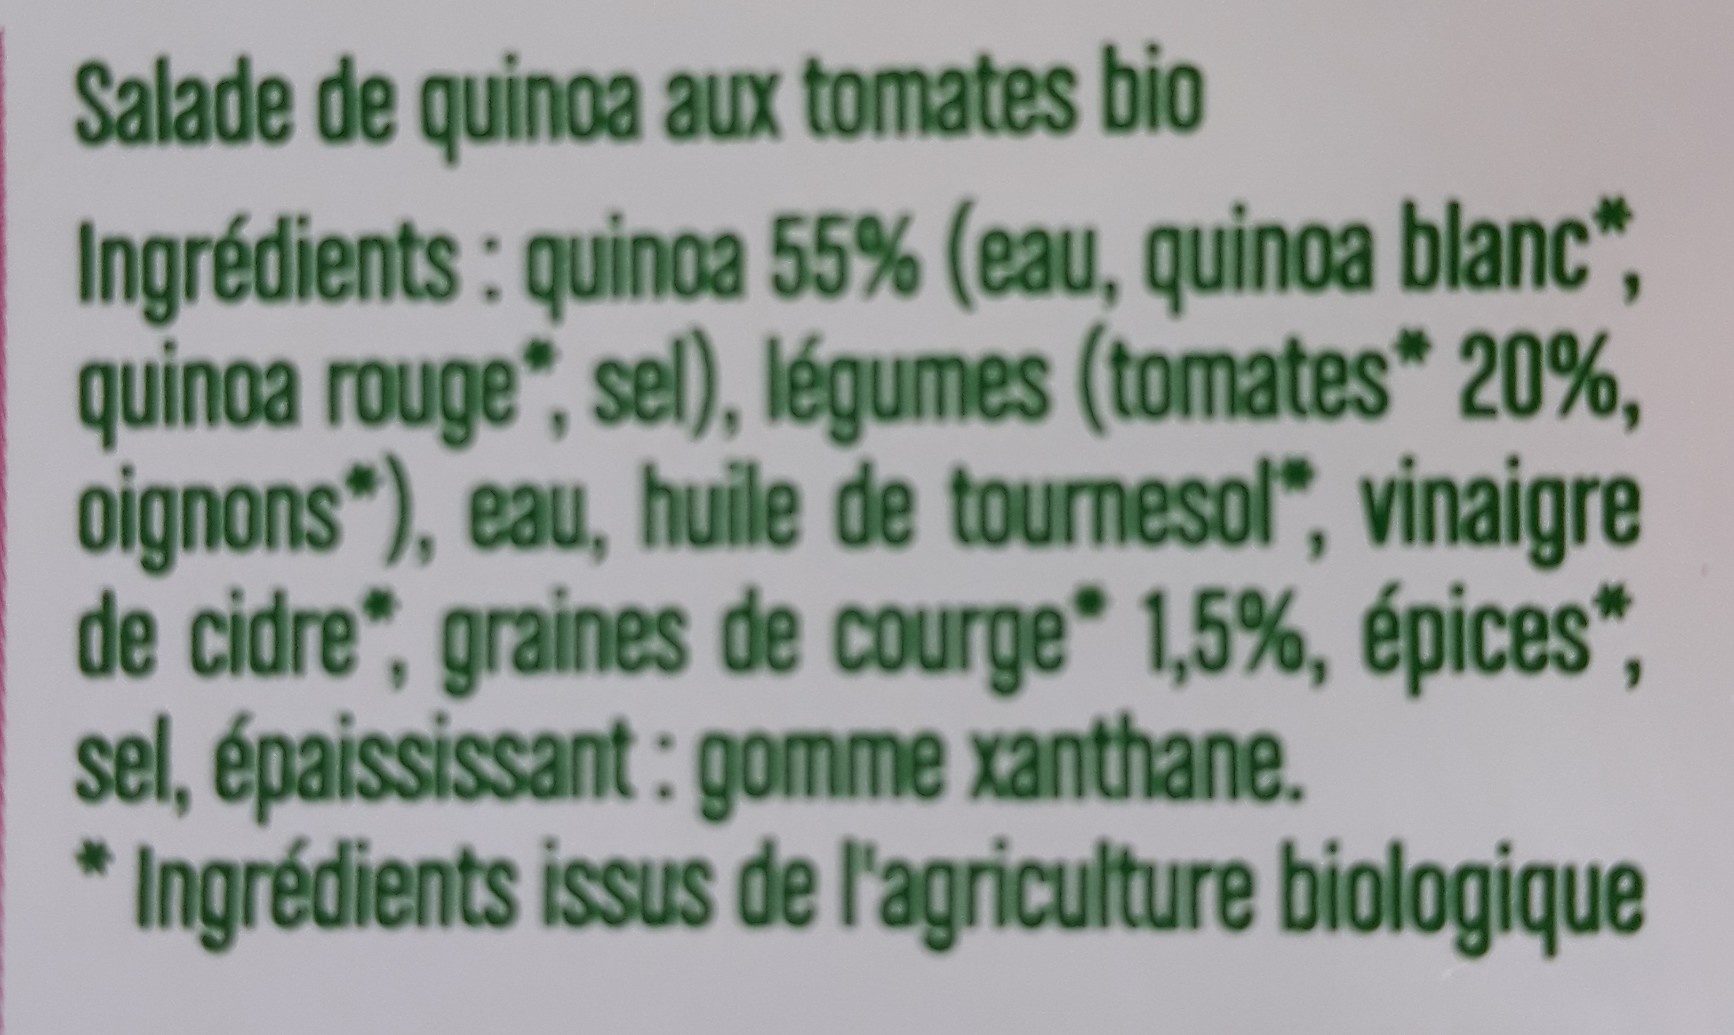 salade de quinoa bio 200g - Ingredients - fr